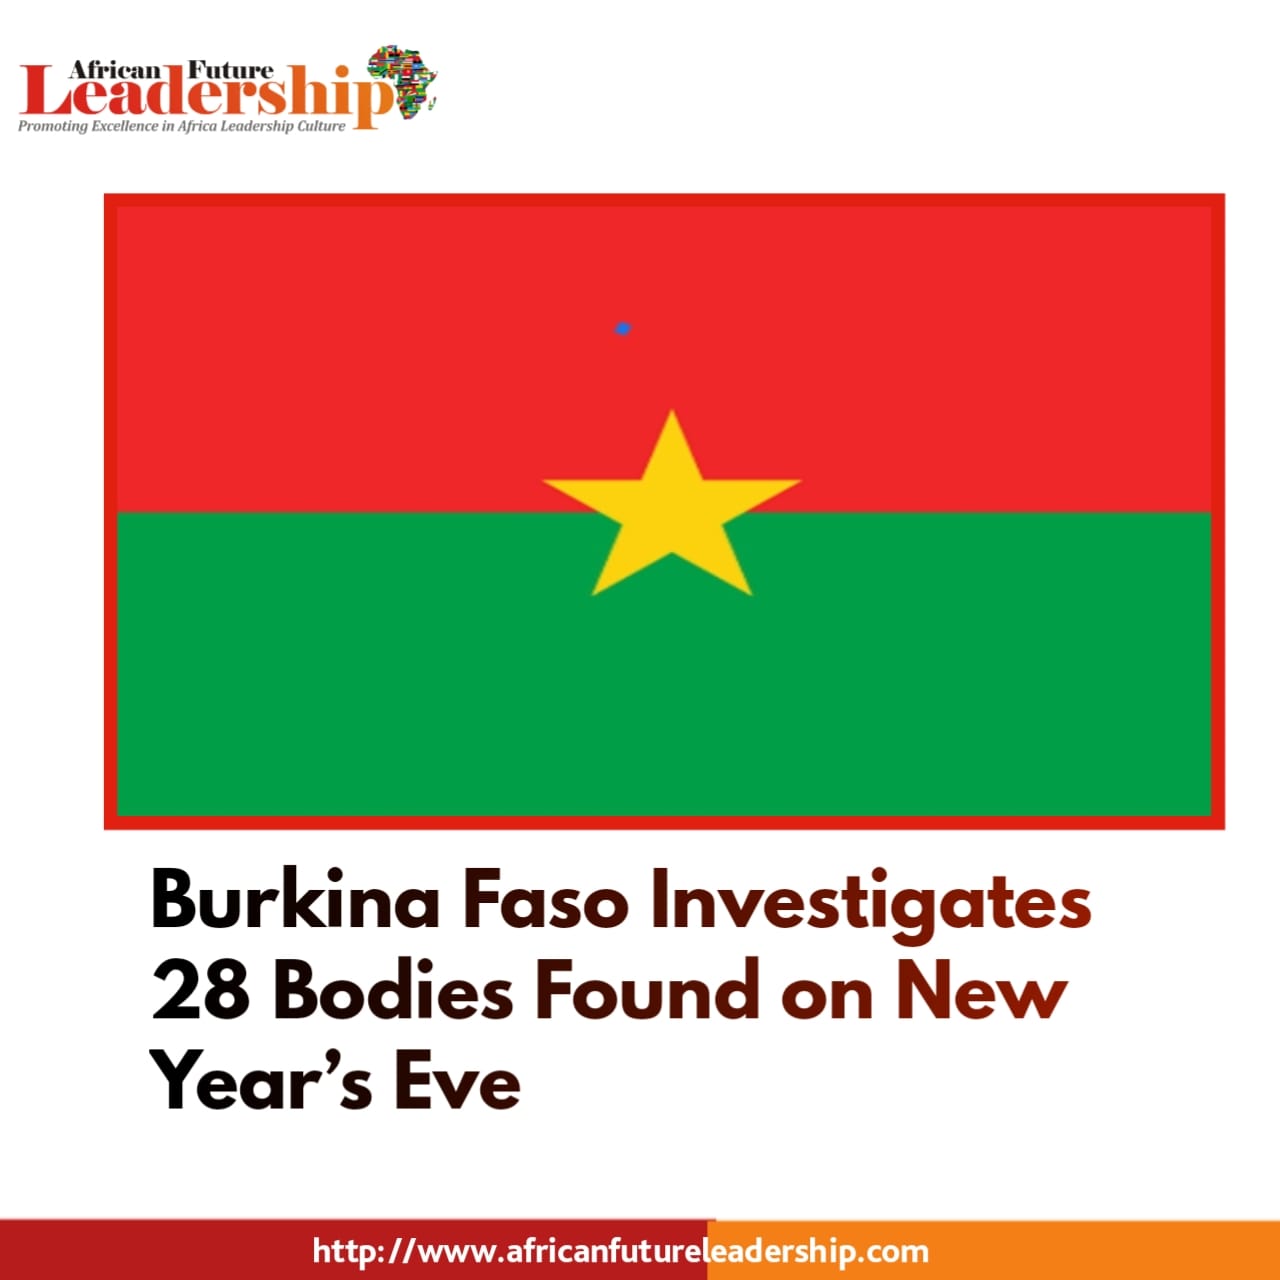 Burkina Faso Investigates 28 Bodies Found on New Year’s Eve